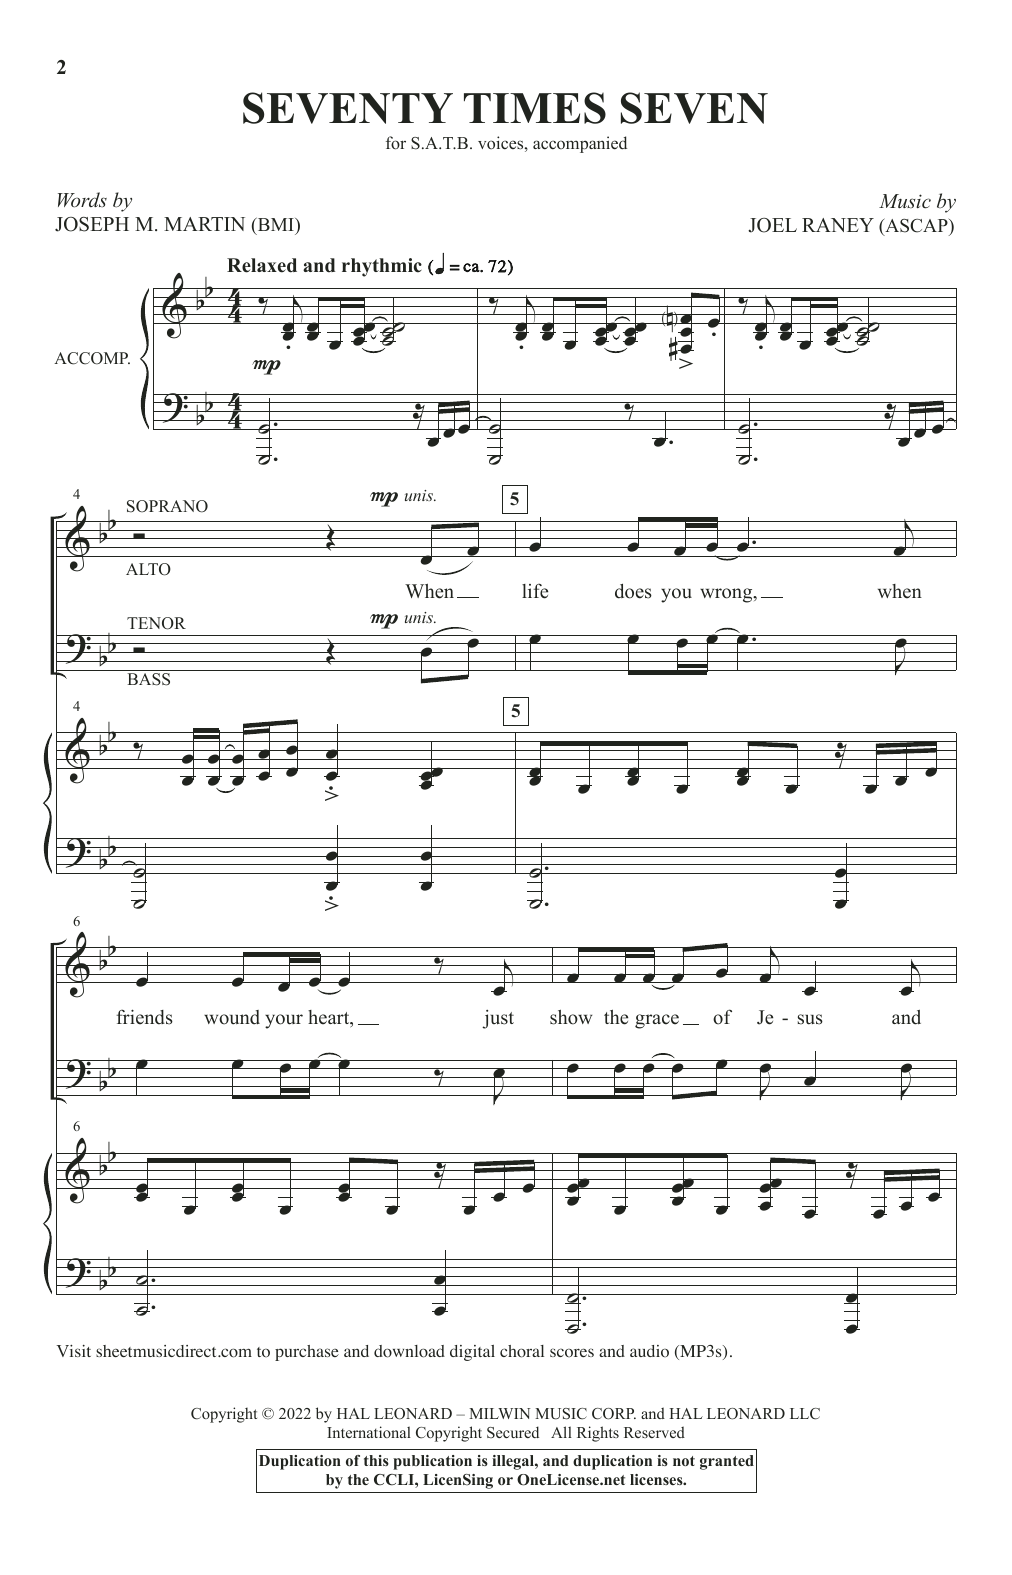 Joseph M. Martin and Joel Raney Seventy Times Seven Sheet Music Notes & Chords for SATB Choir - Download or Print PDF